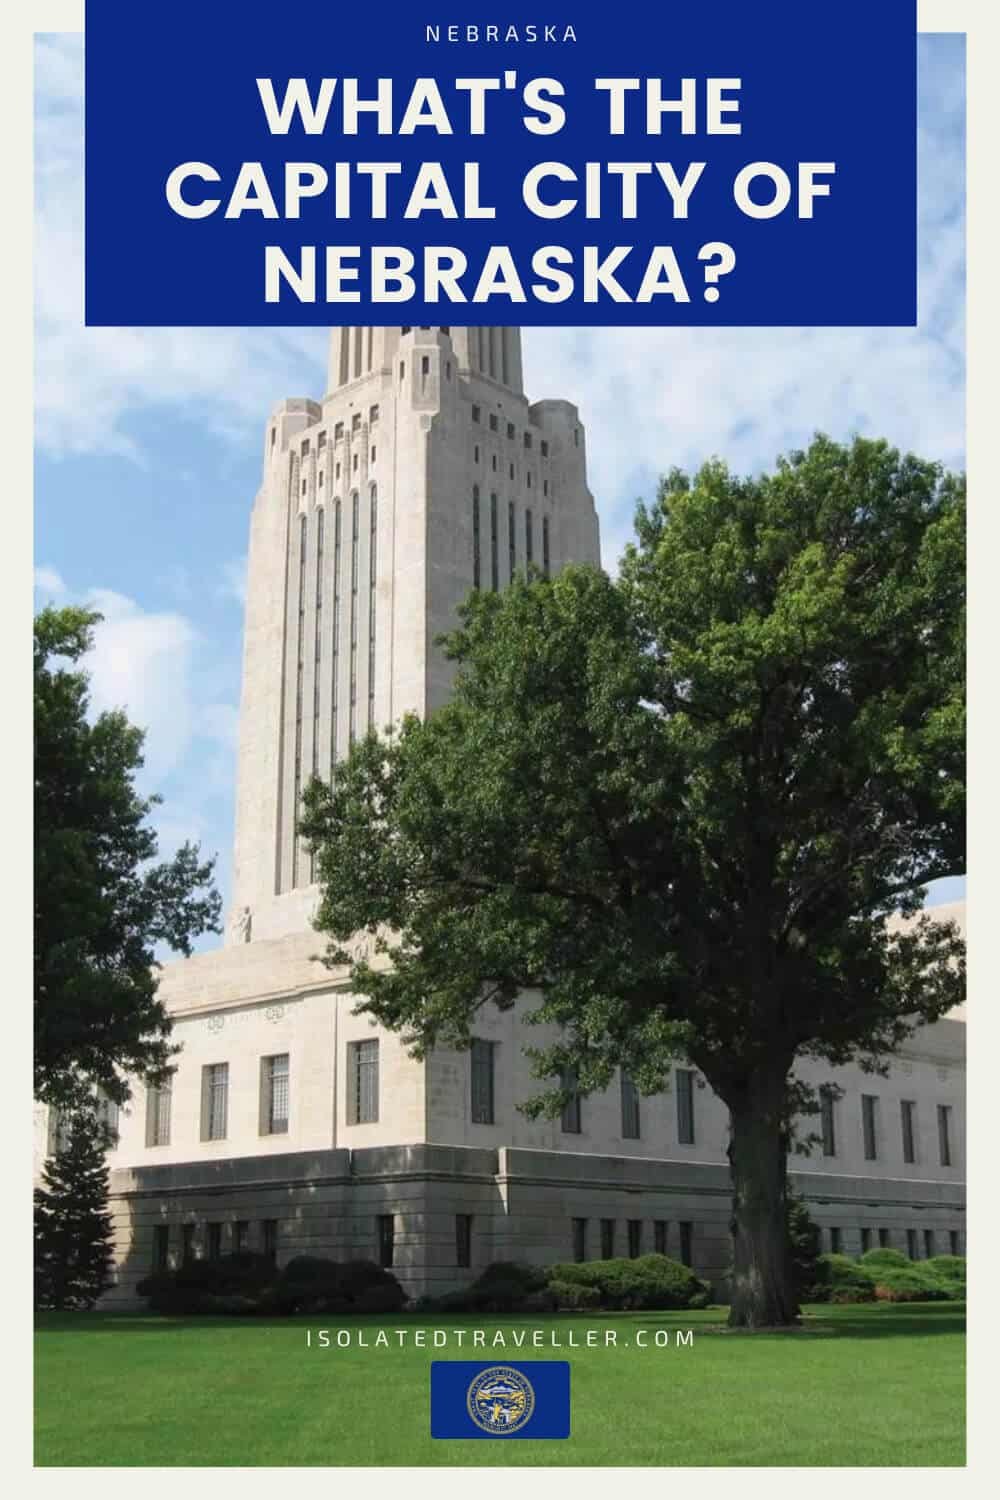 What's the Capital City of Nebraska?